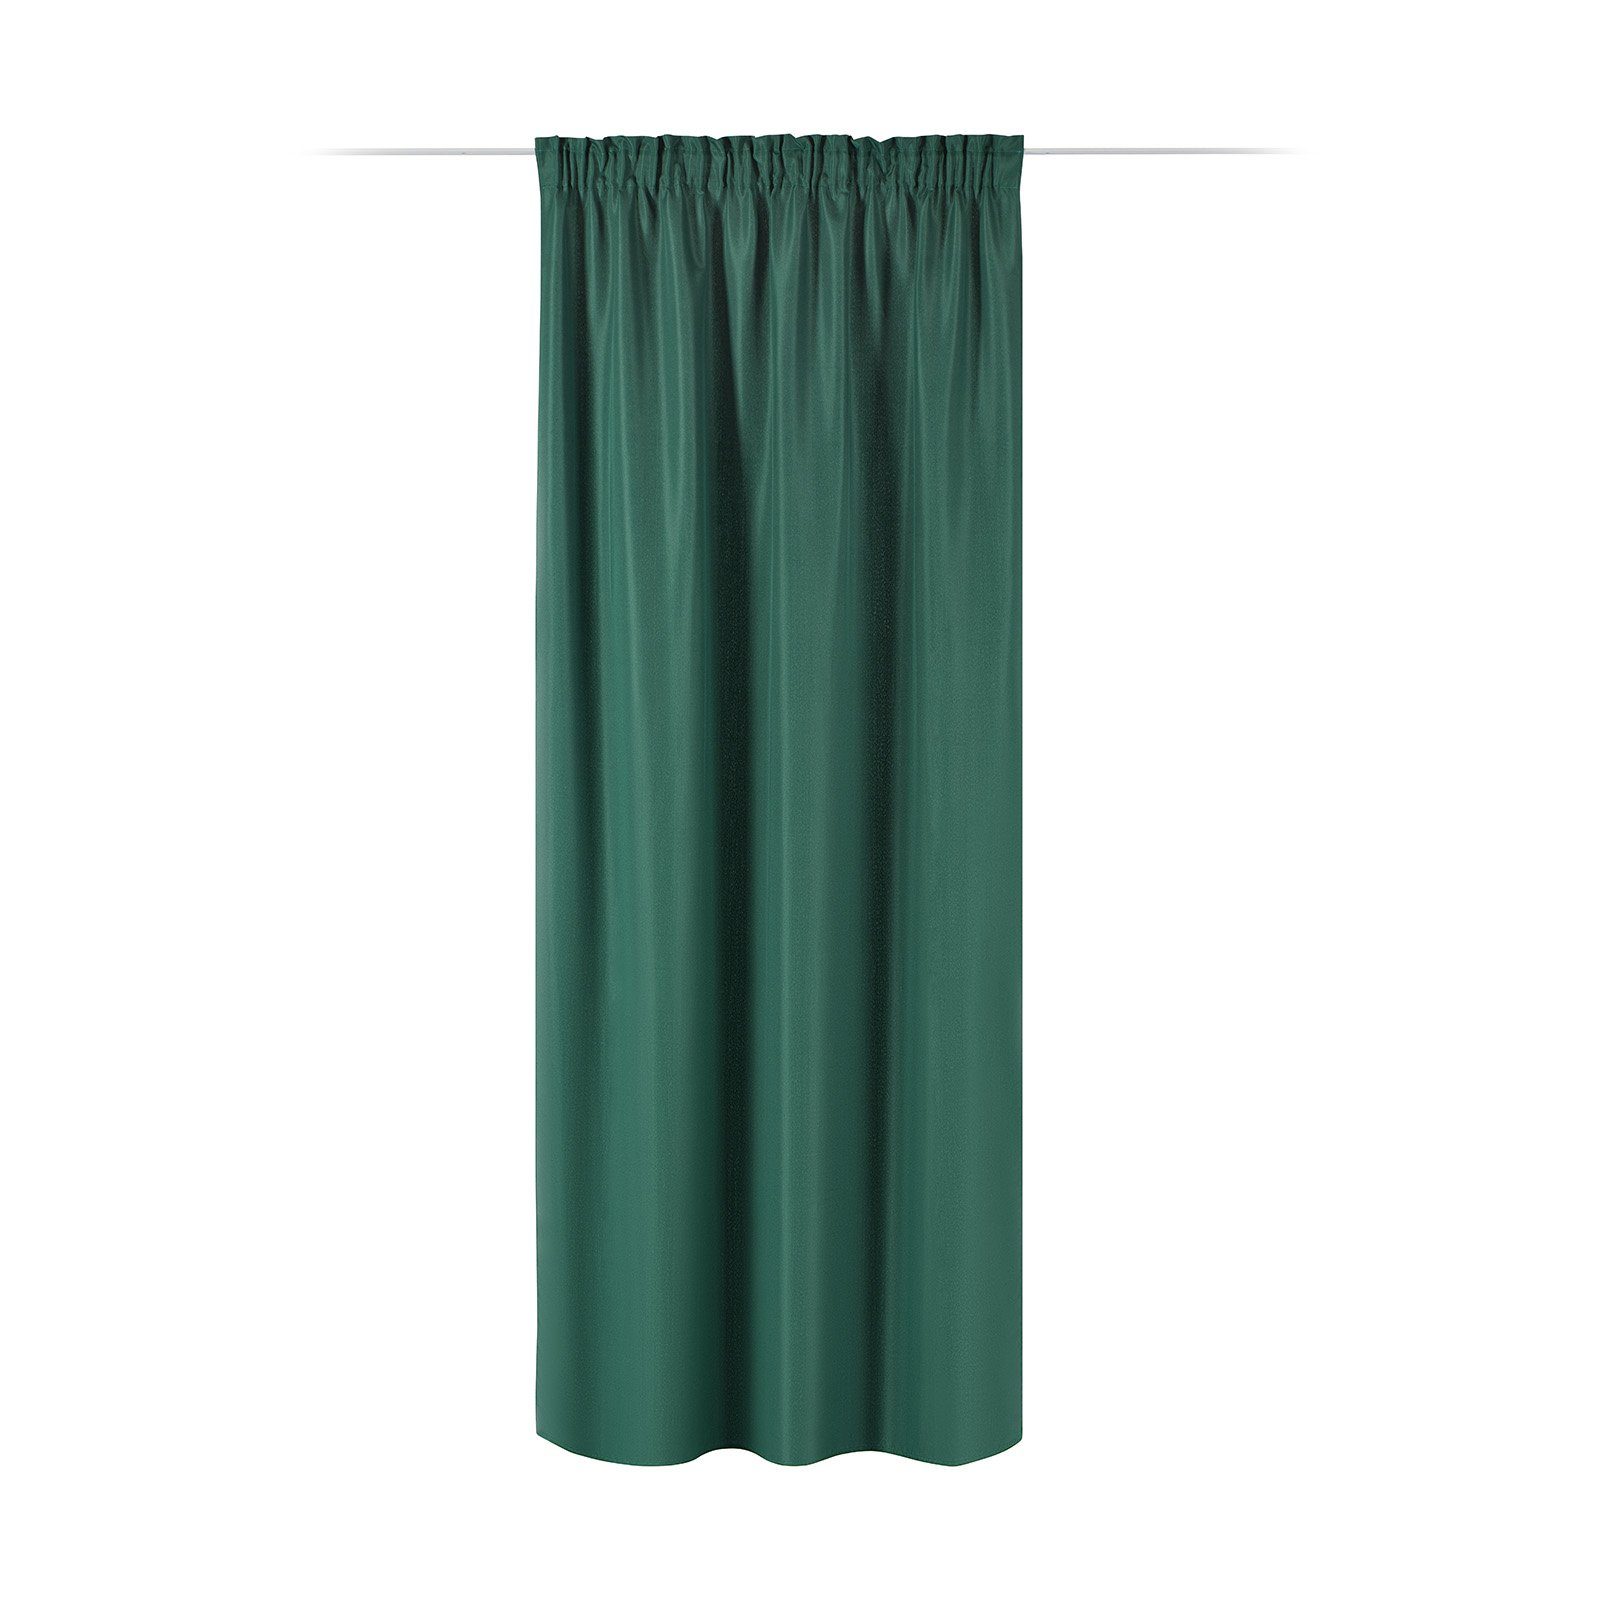 Vorhang Blickdichter Vorhang 140x250cm, Kräuselband, Polyester, St) JEMIDI, grün, (1